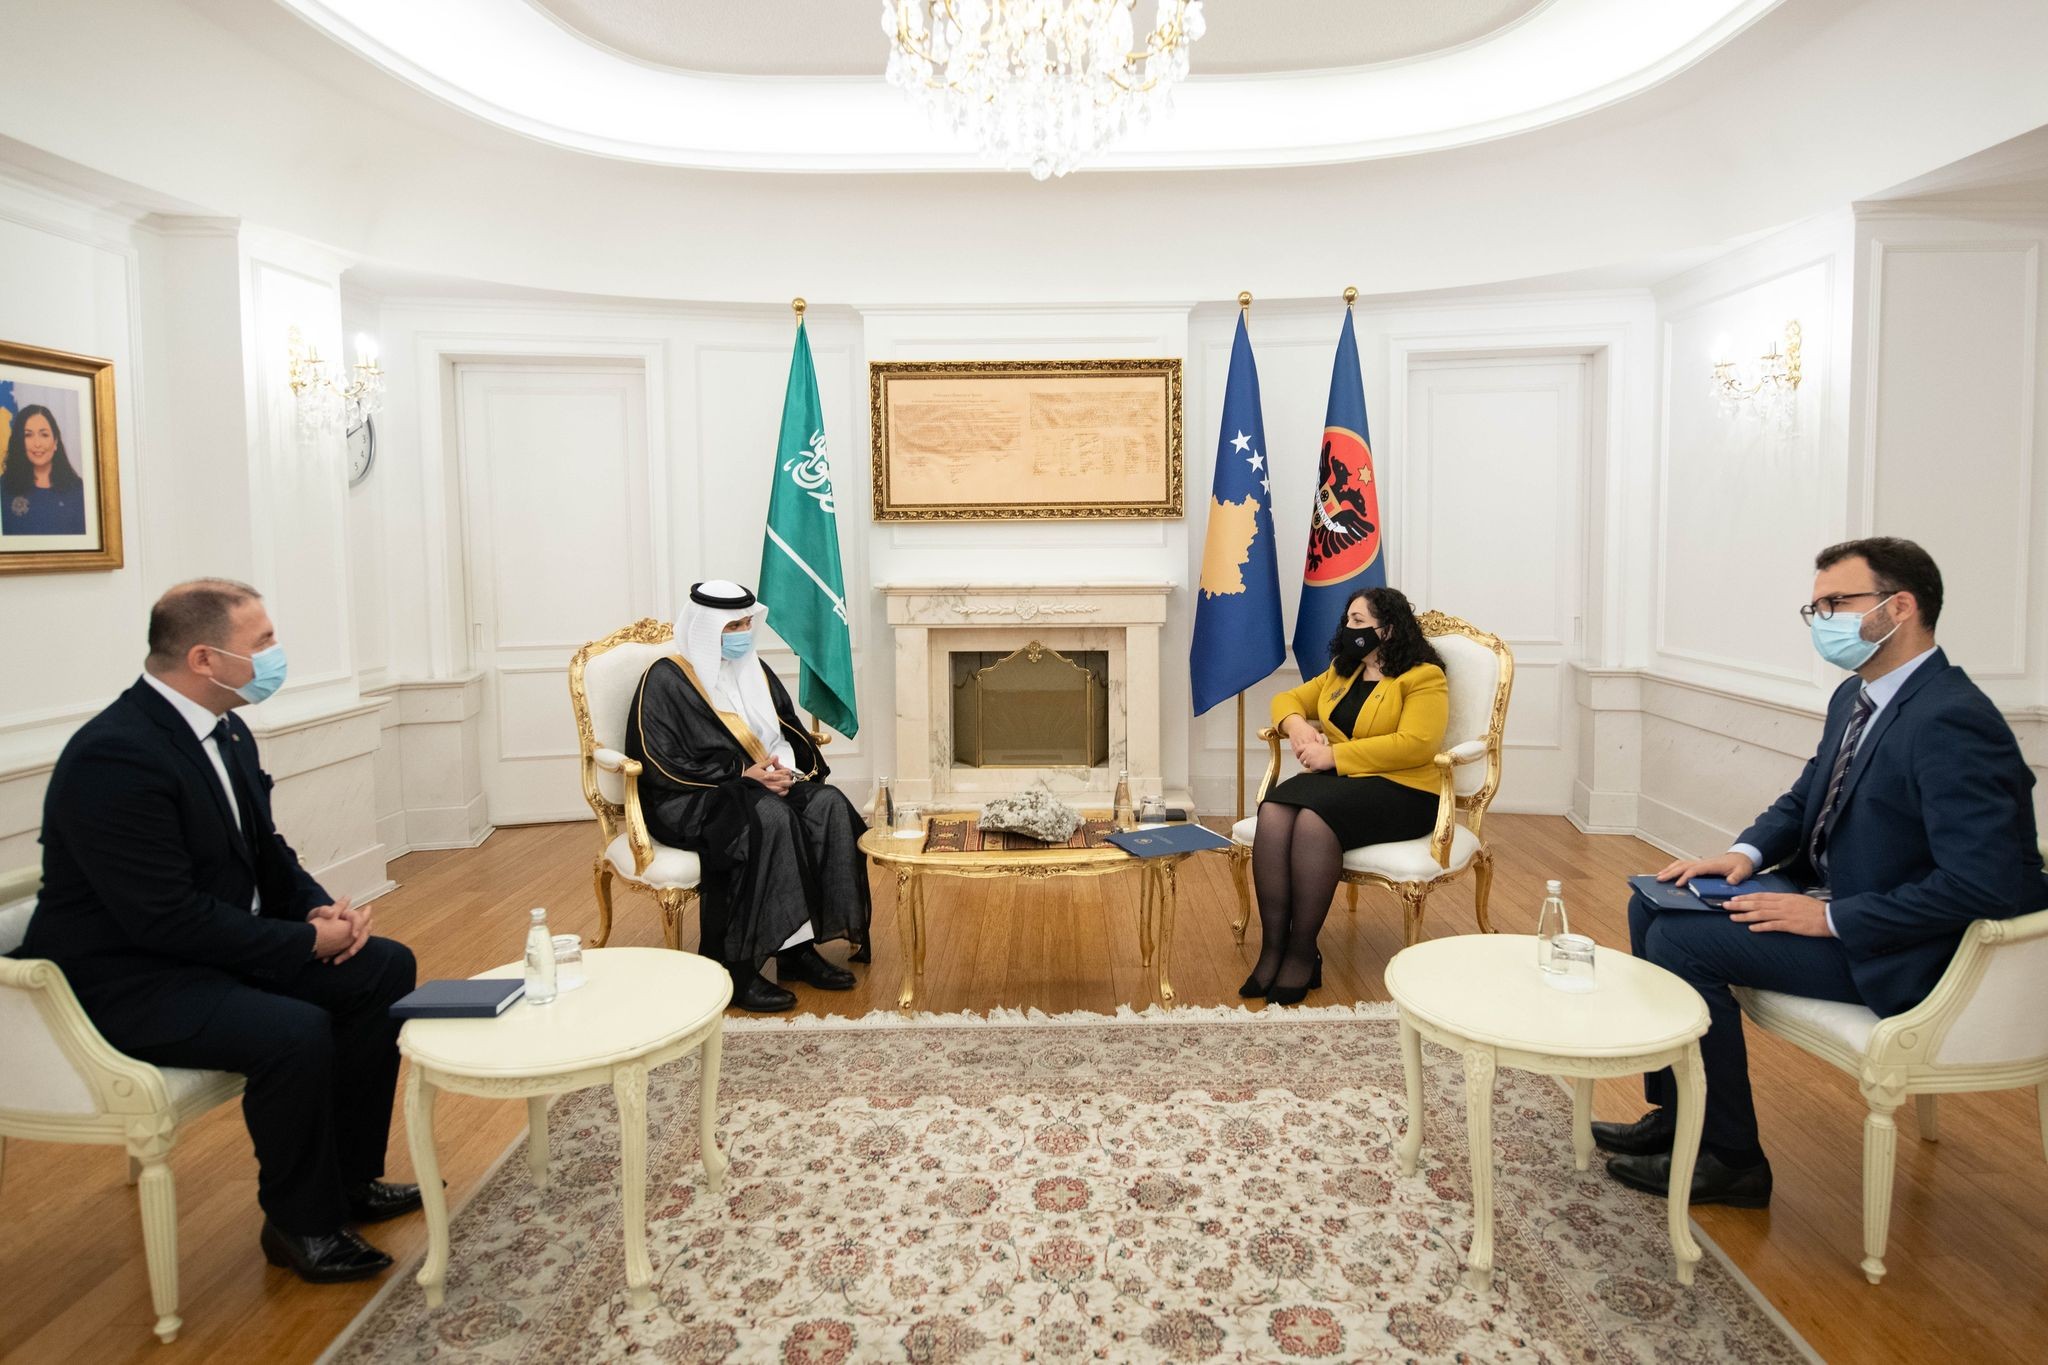 Presidentja Osmani pranoi letrat kredenciale nga ambasadori i Arabisë Saudite